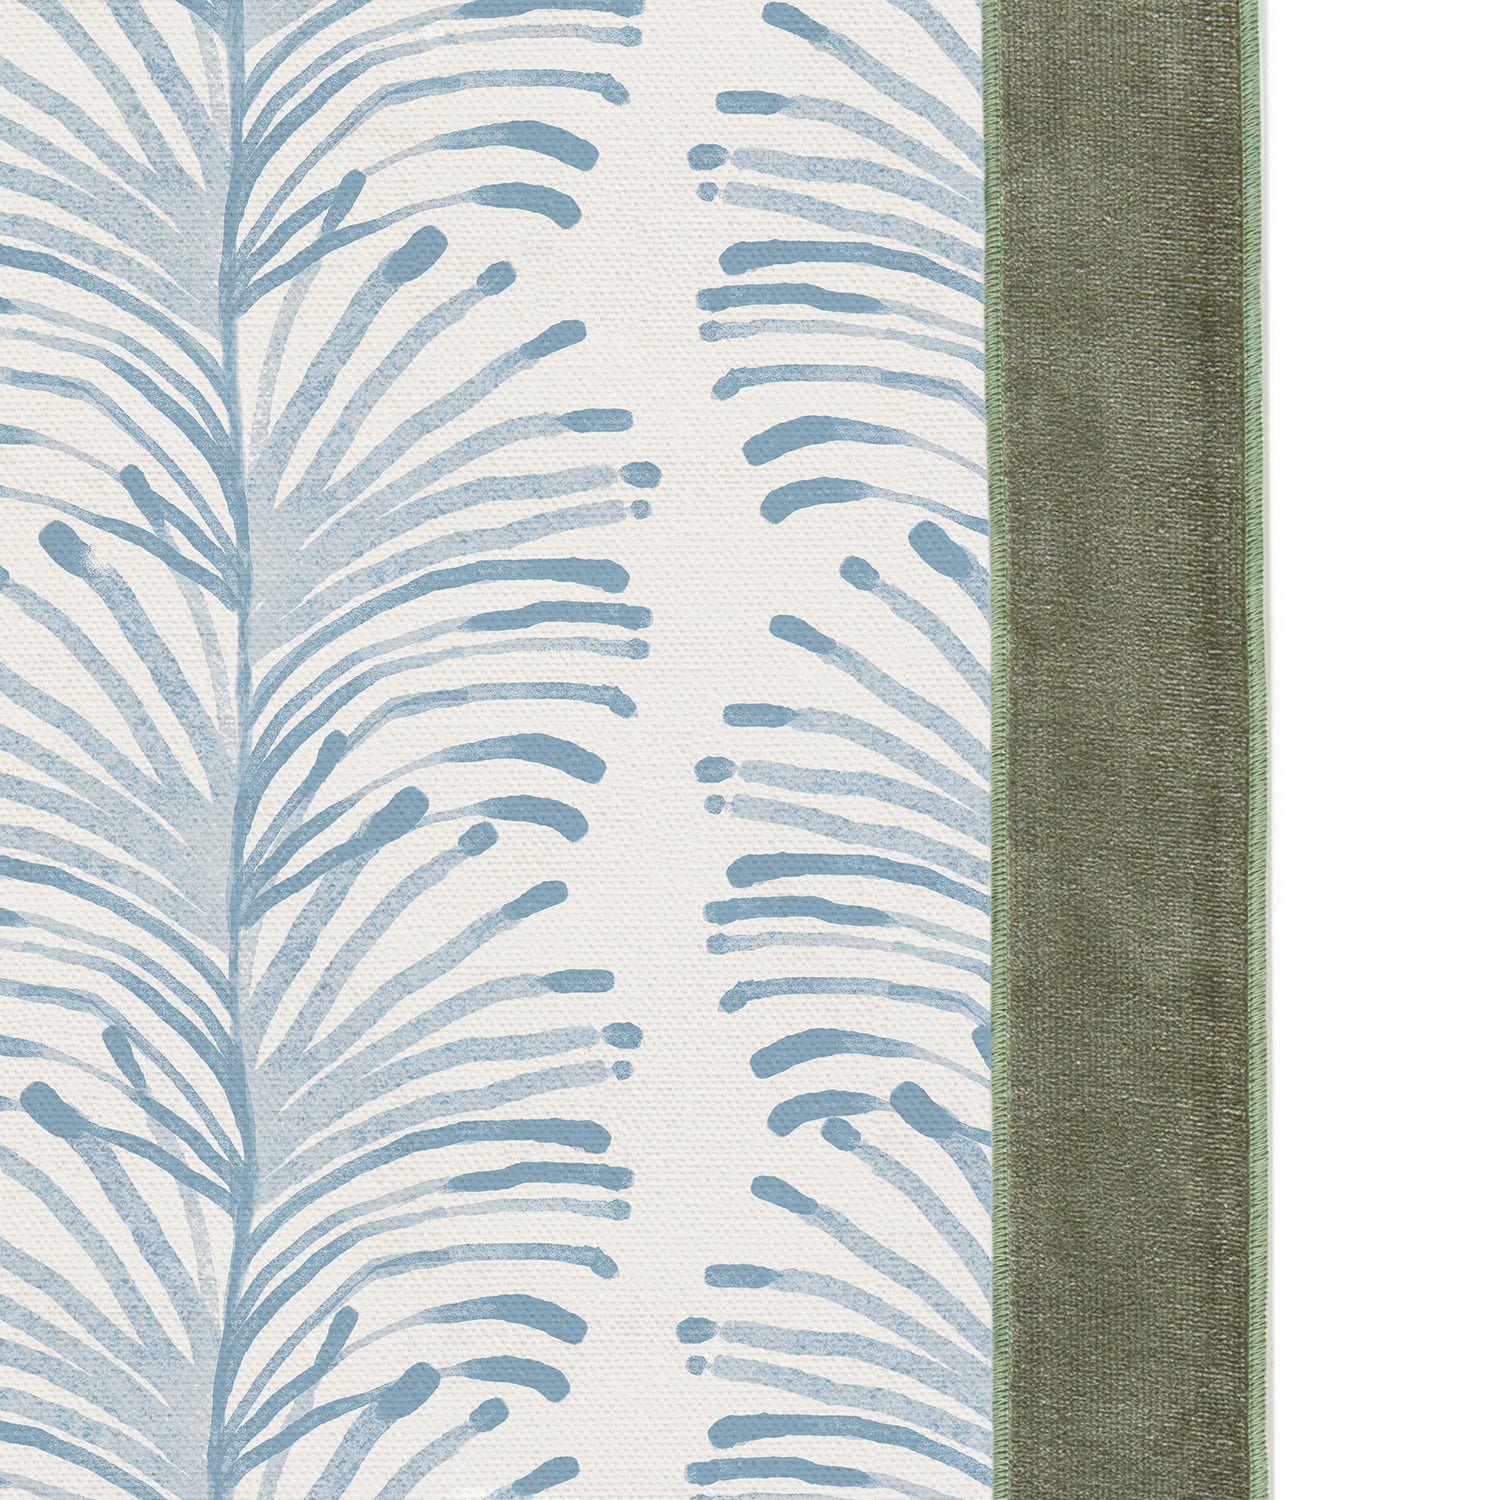 Upclose picture of Emma Sky custom Sky Blue Botanical Stripeshower curtain with fern velvet band trim